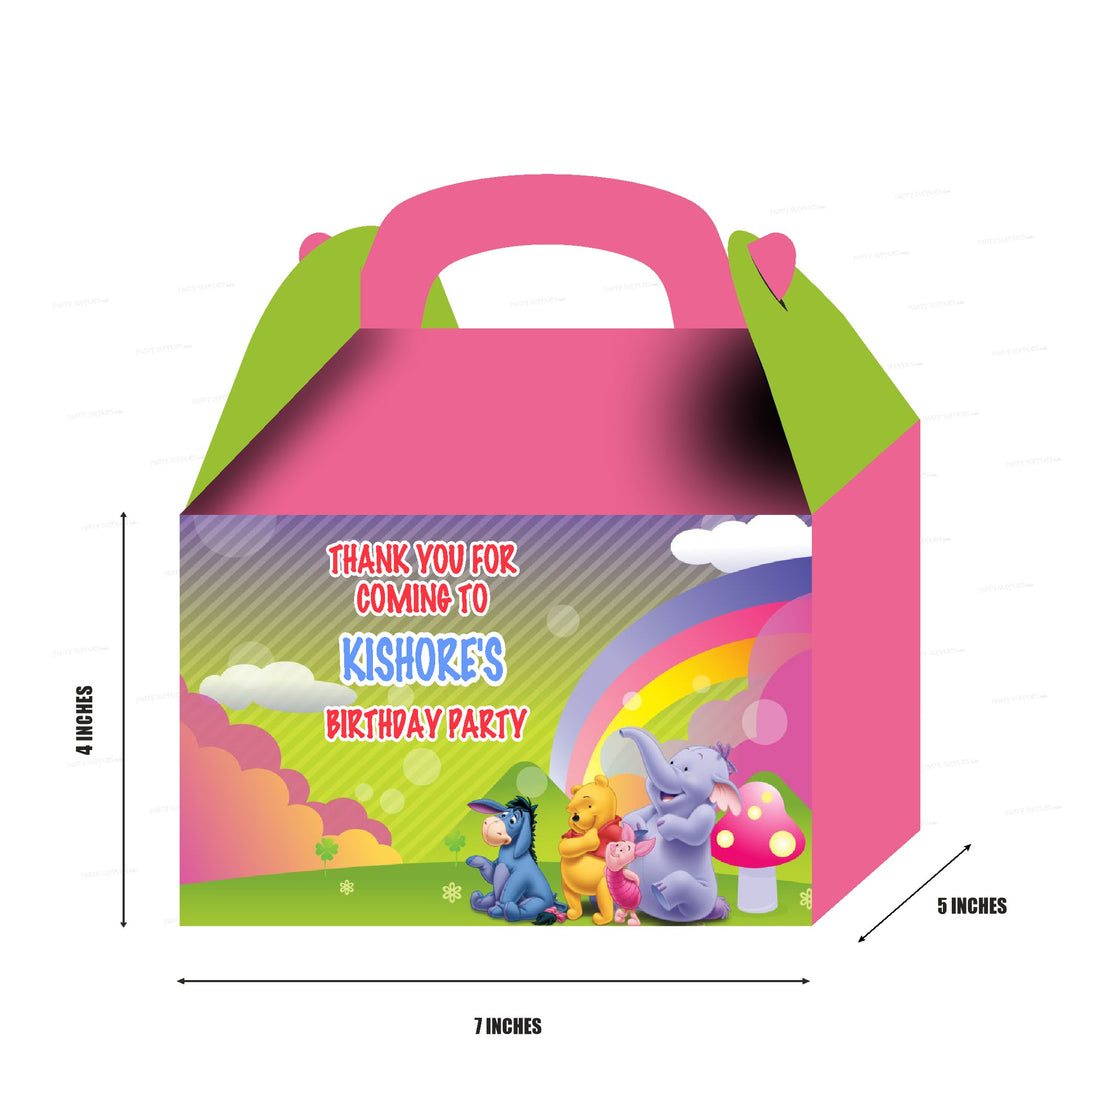 PSI Winnie the Pooh Theme Goodie Return Gift Boxes